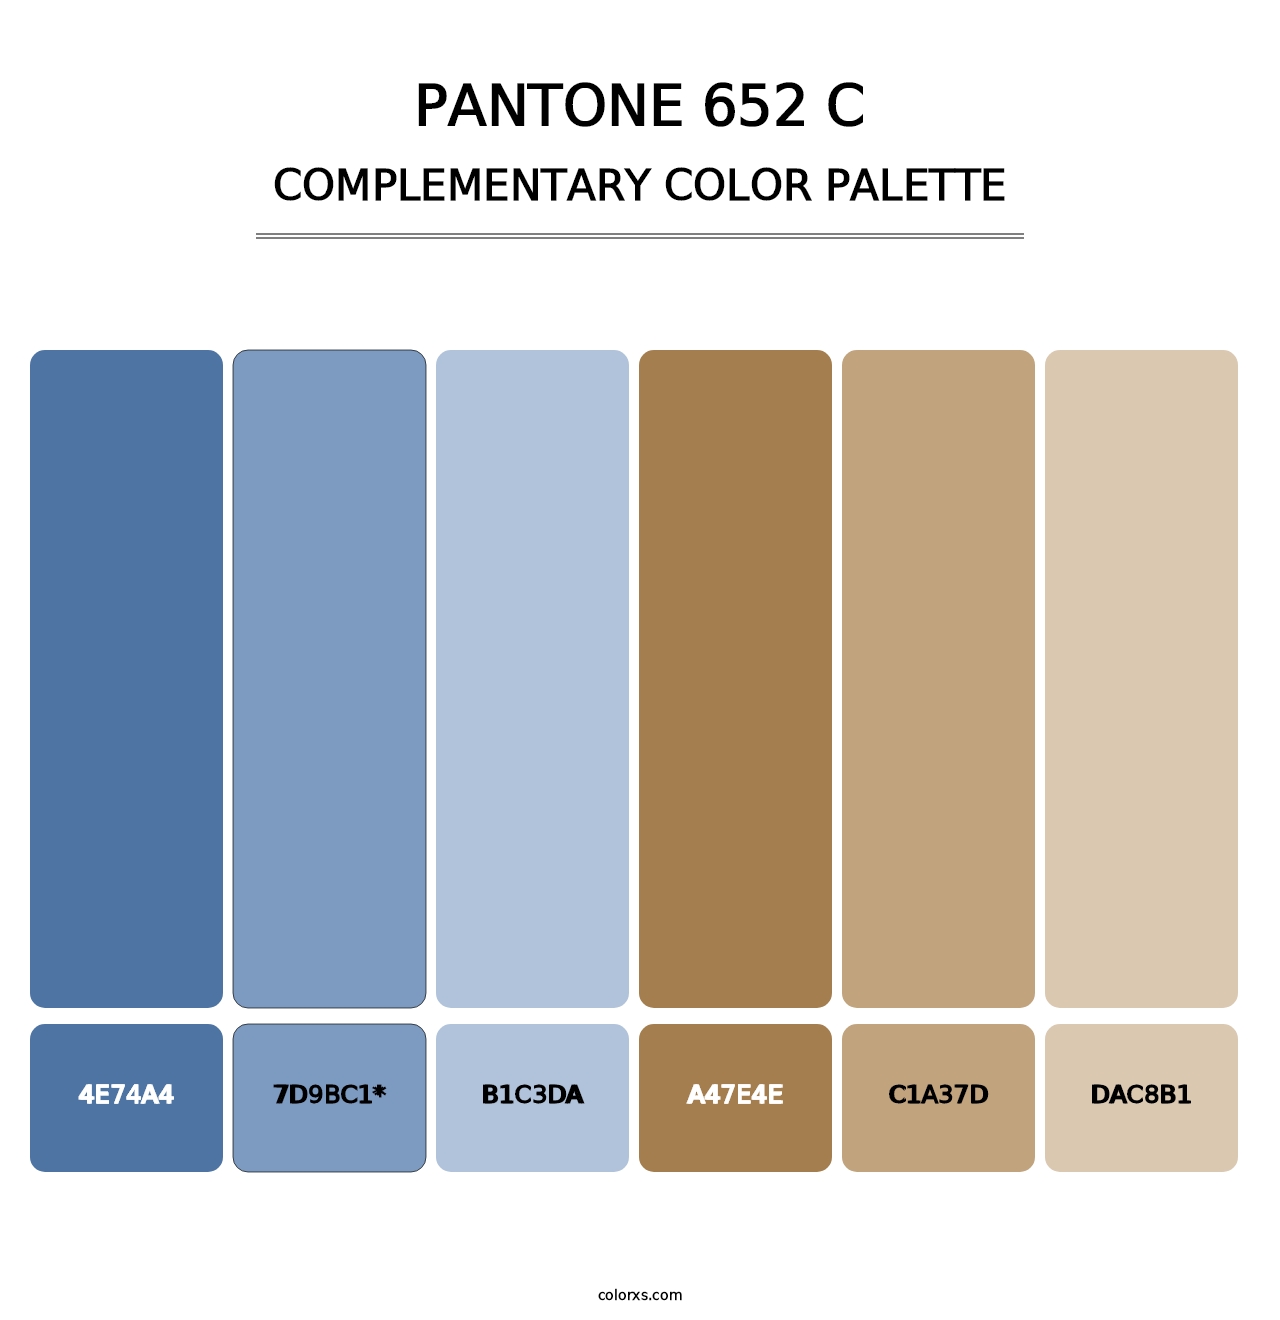 PANTONE 652 C - Complementary Color Palette